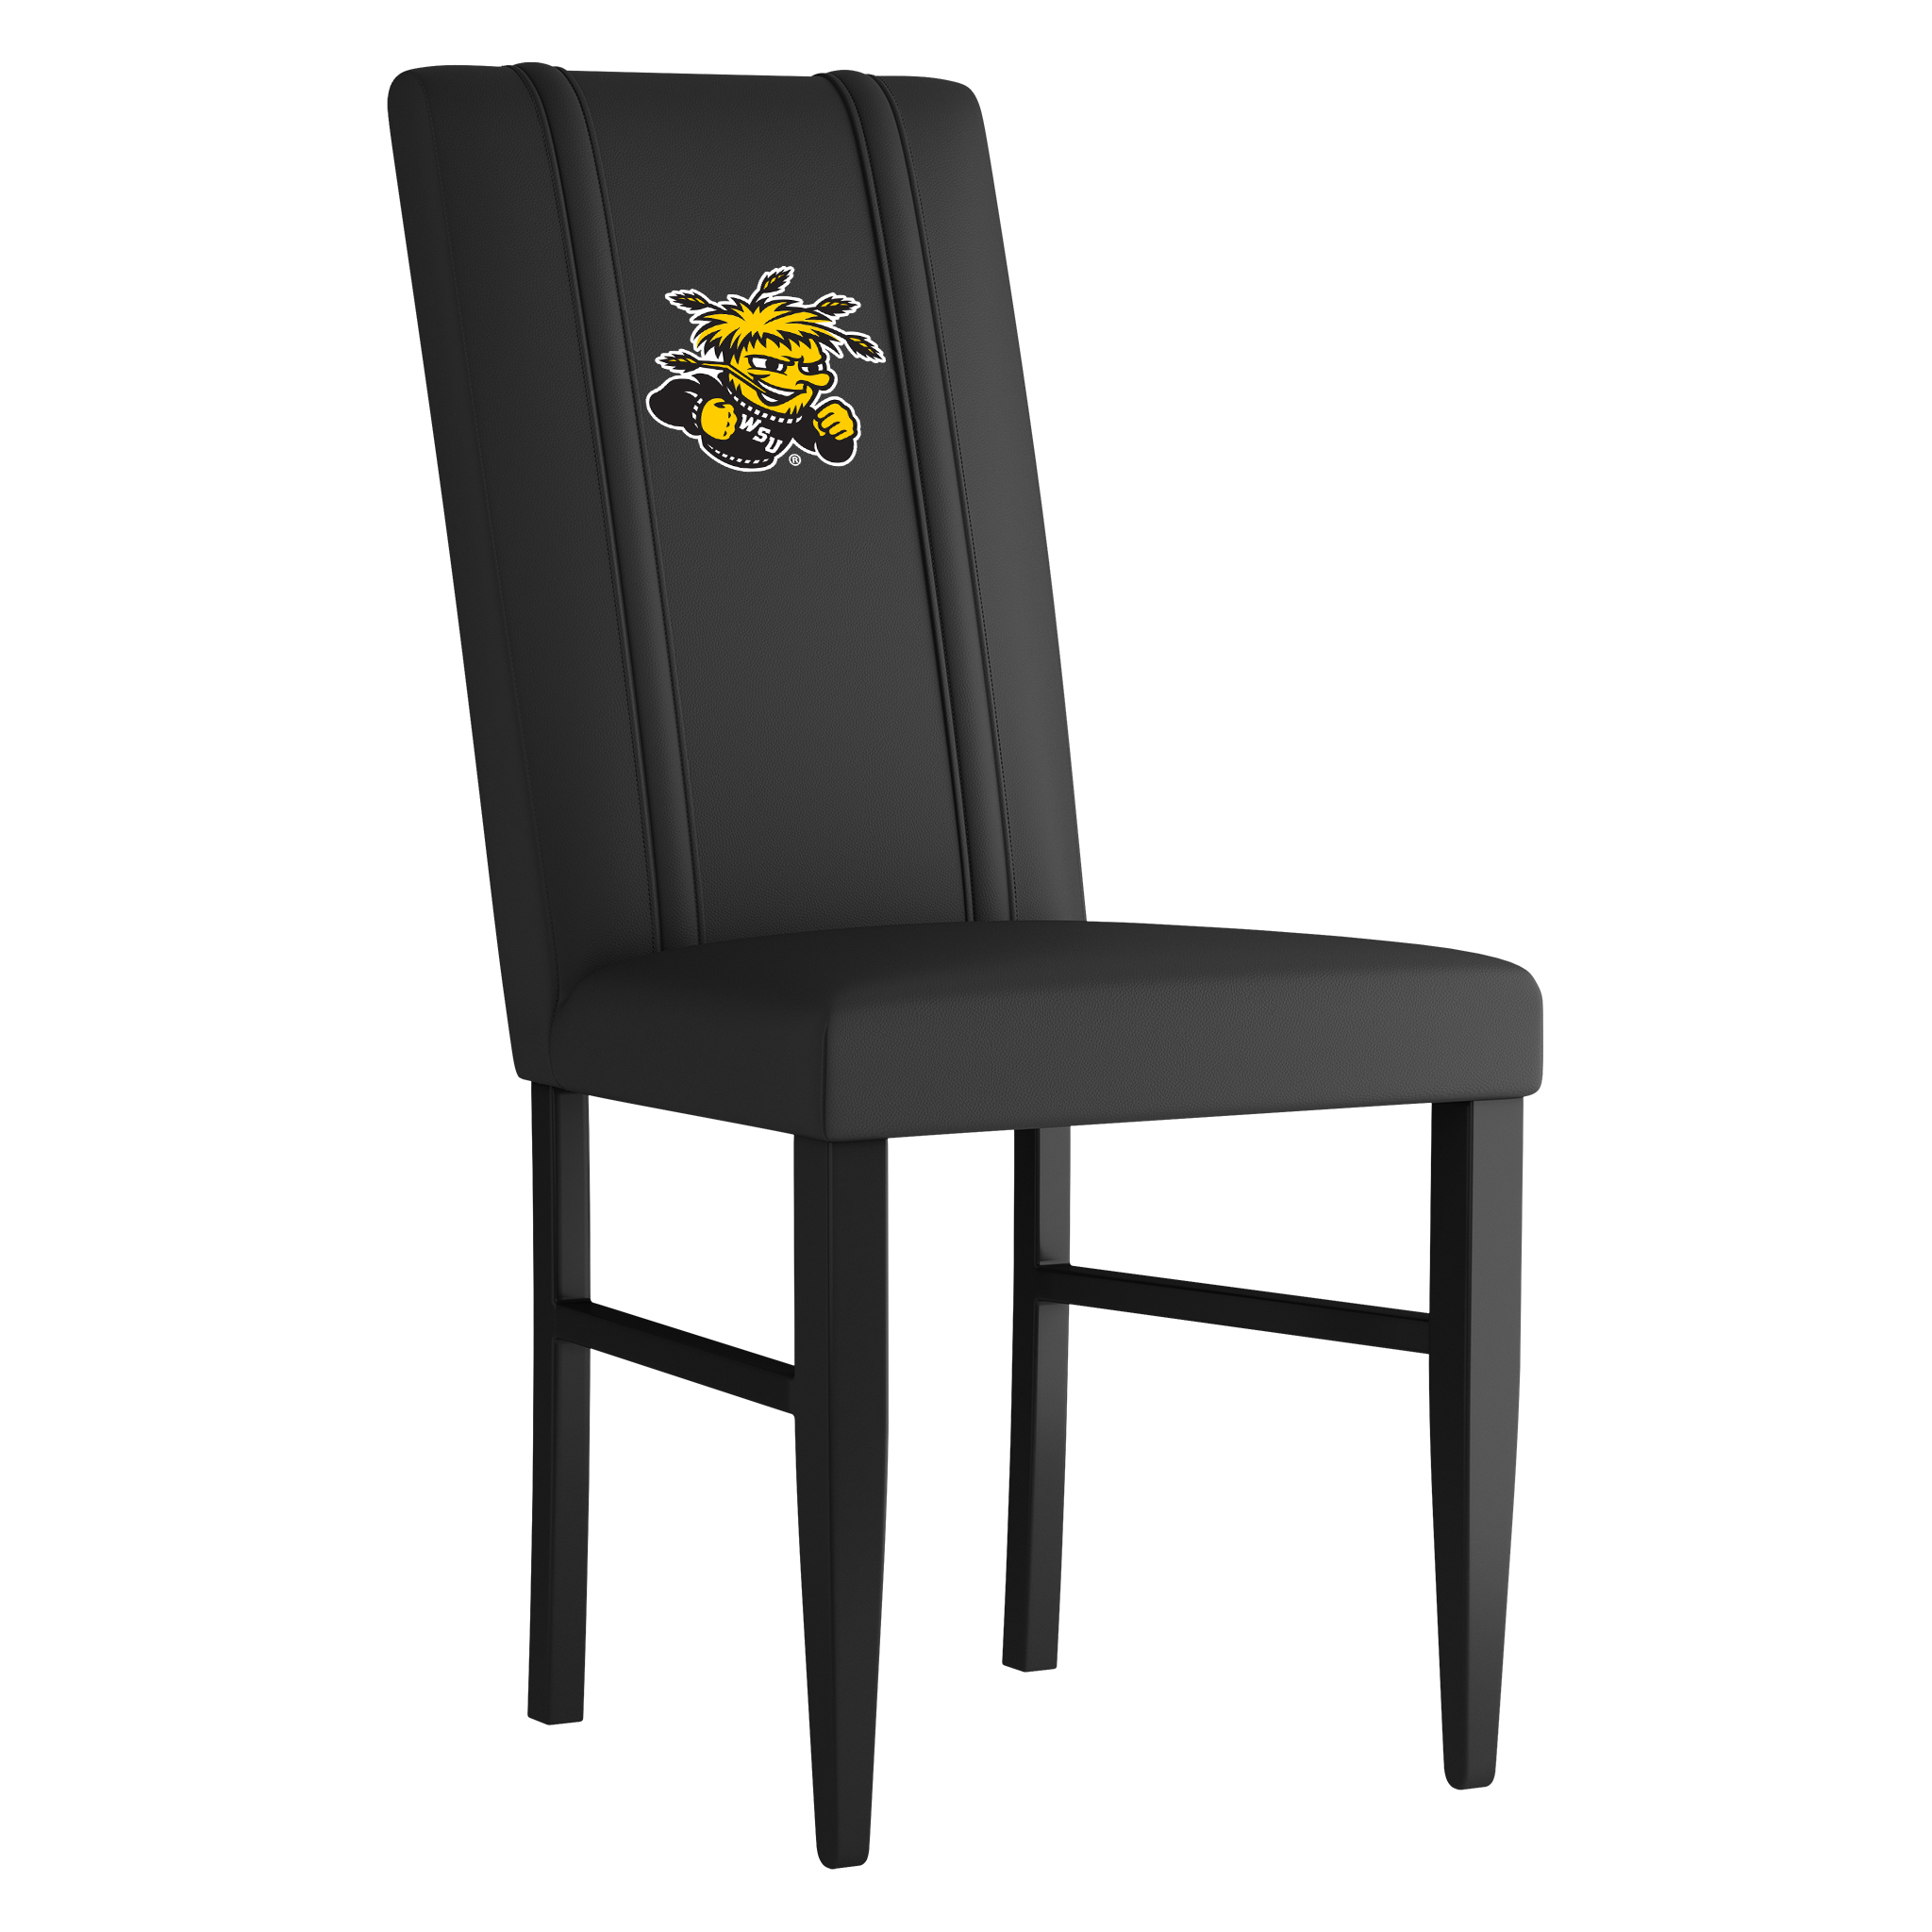 Wichita State Side Chair 2000 With Wichita State Alternate Logo